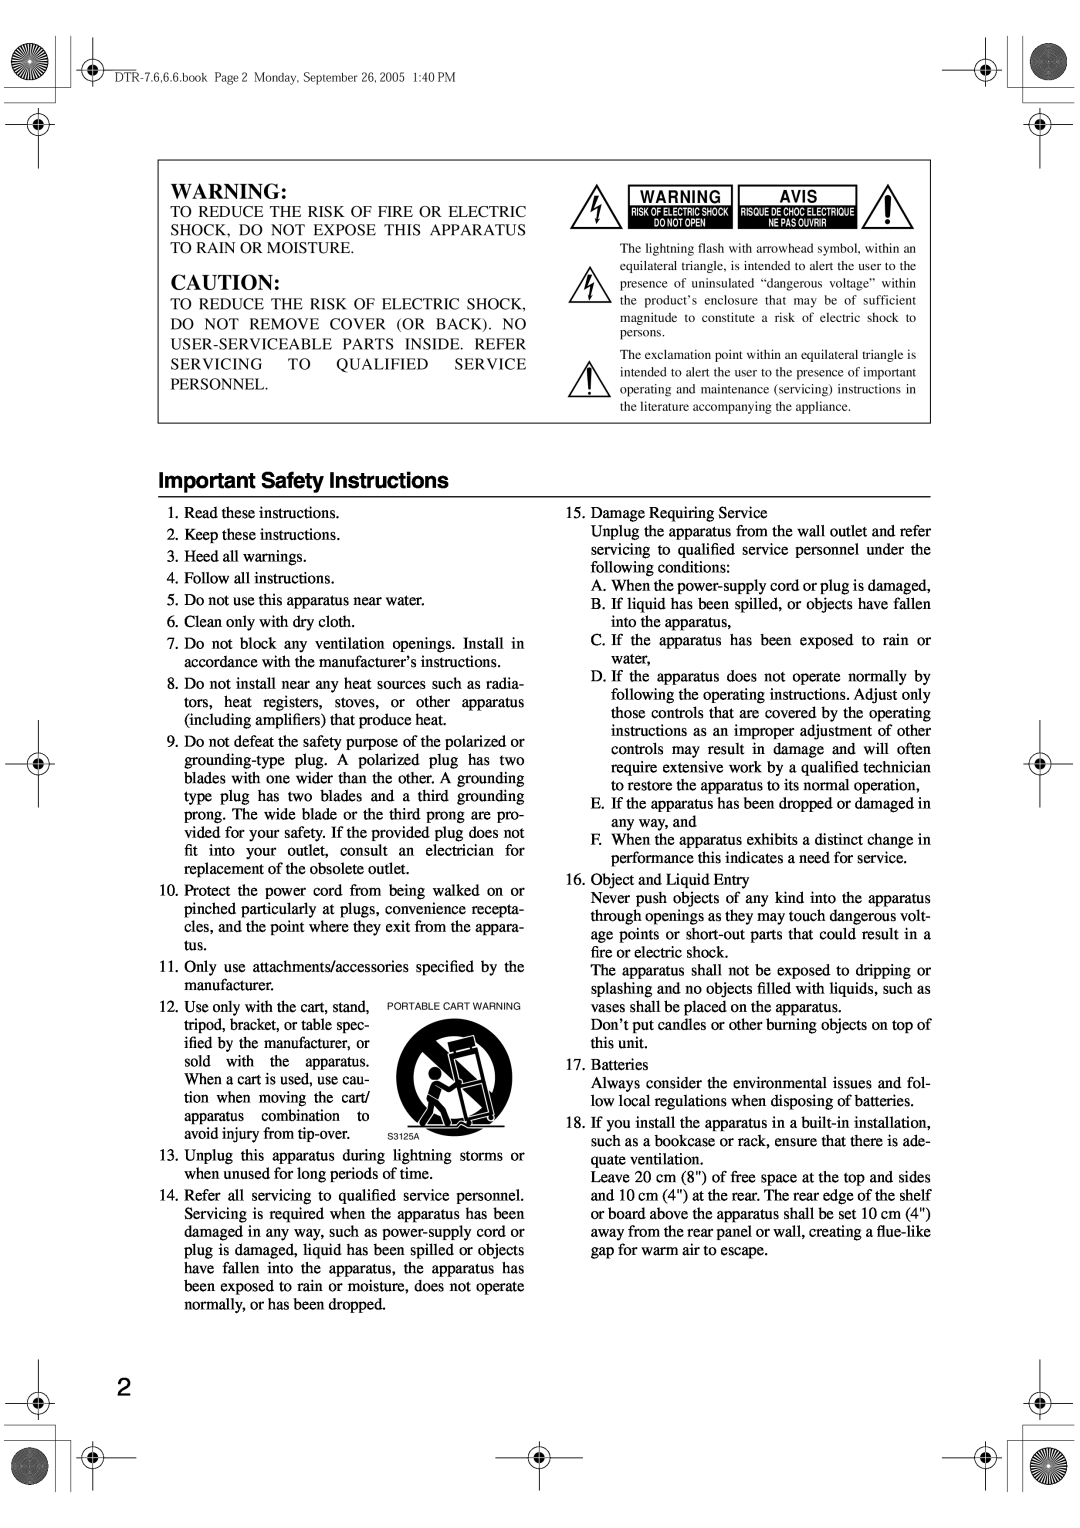 Integra DTR-7.6/6.6 instruction manual Important Safety Instructions, Avis 